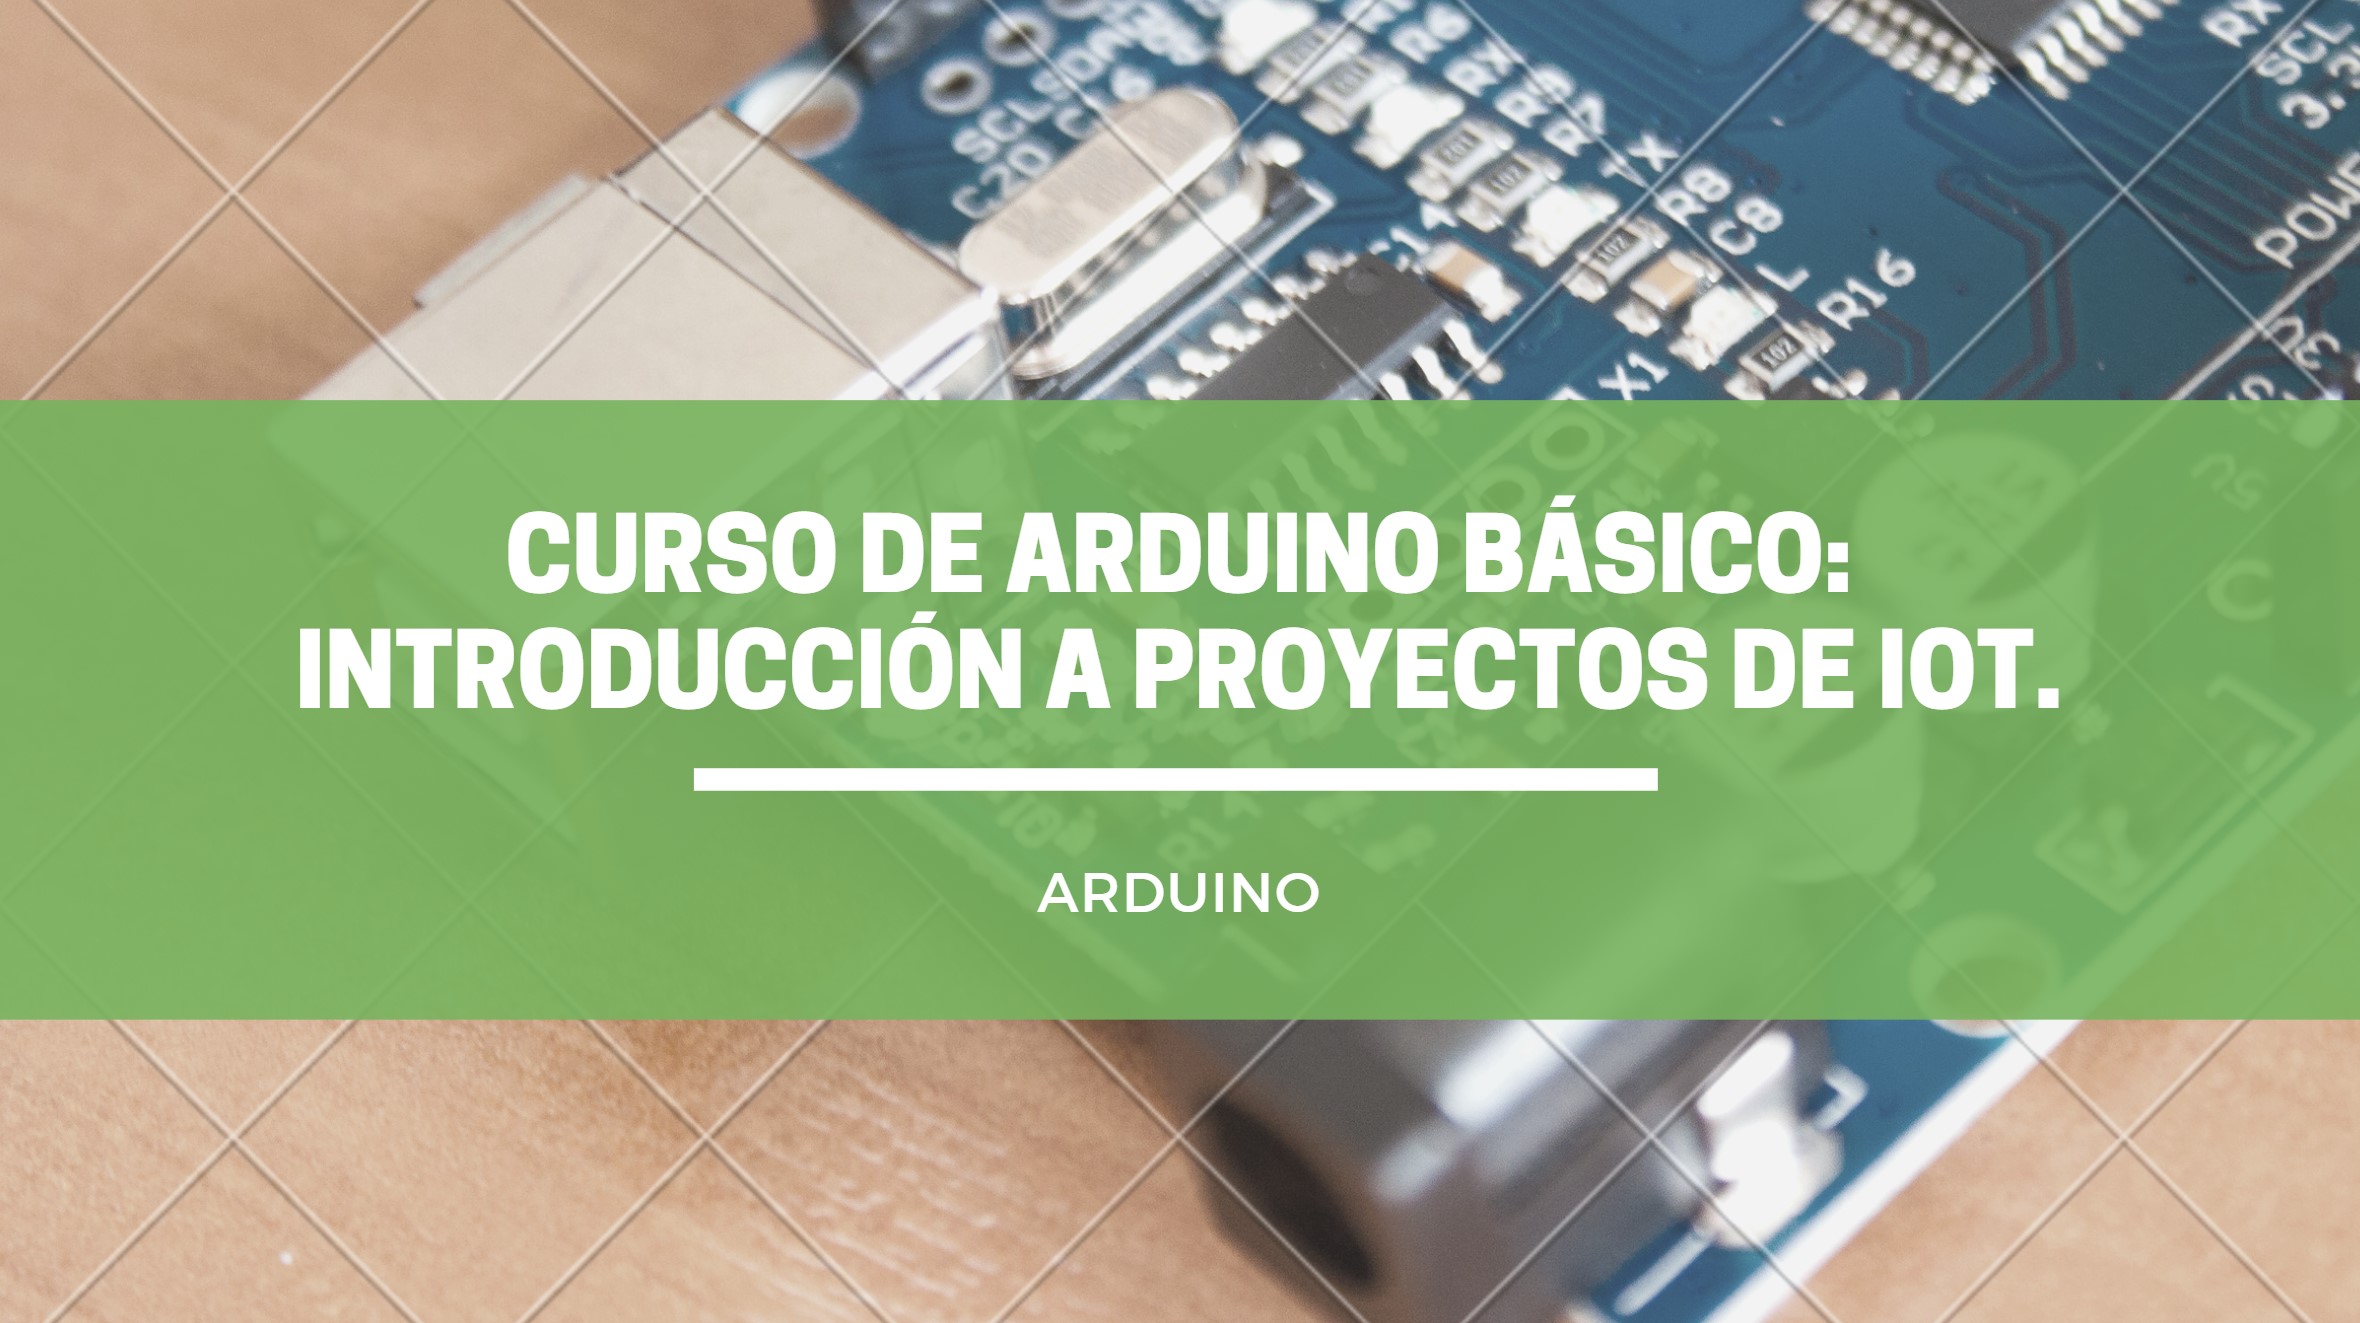 CURSO DE ARDUINO BÁSICO: Introducción a proyectos de IoT.